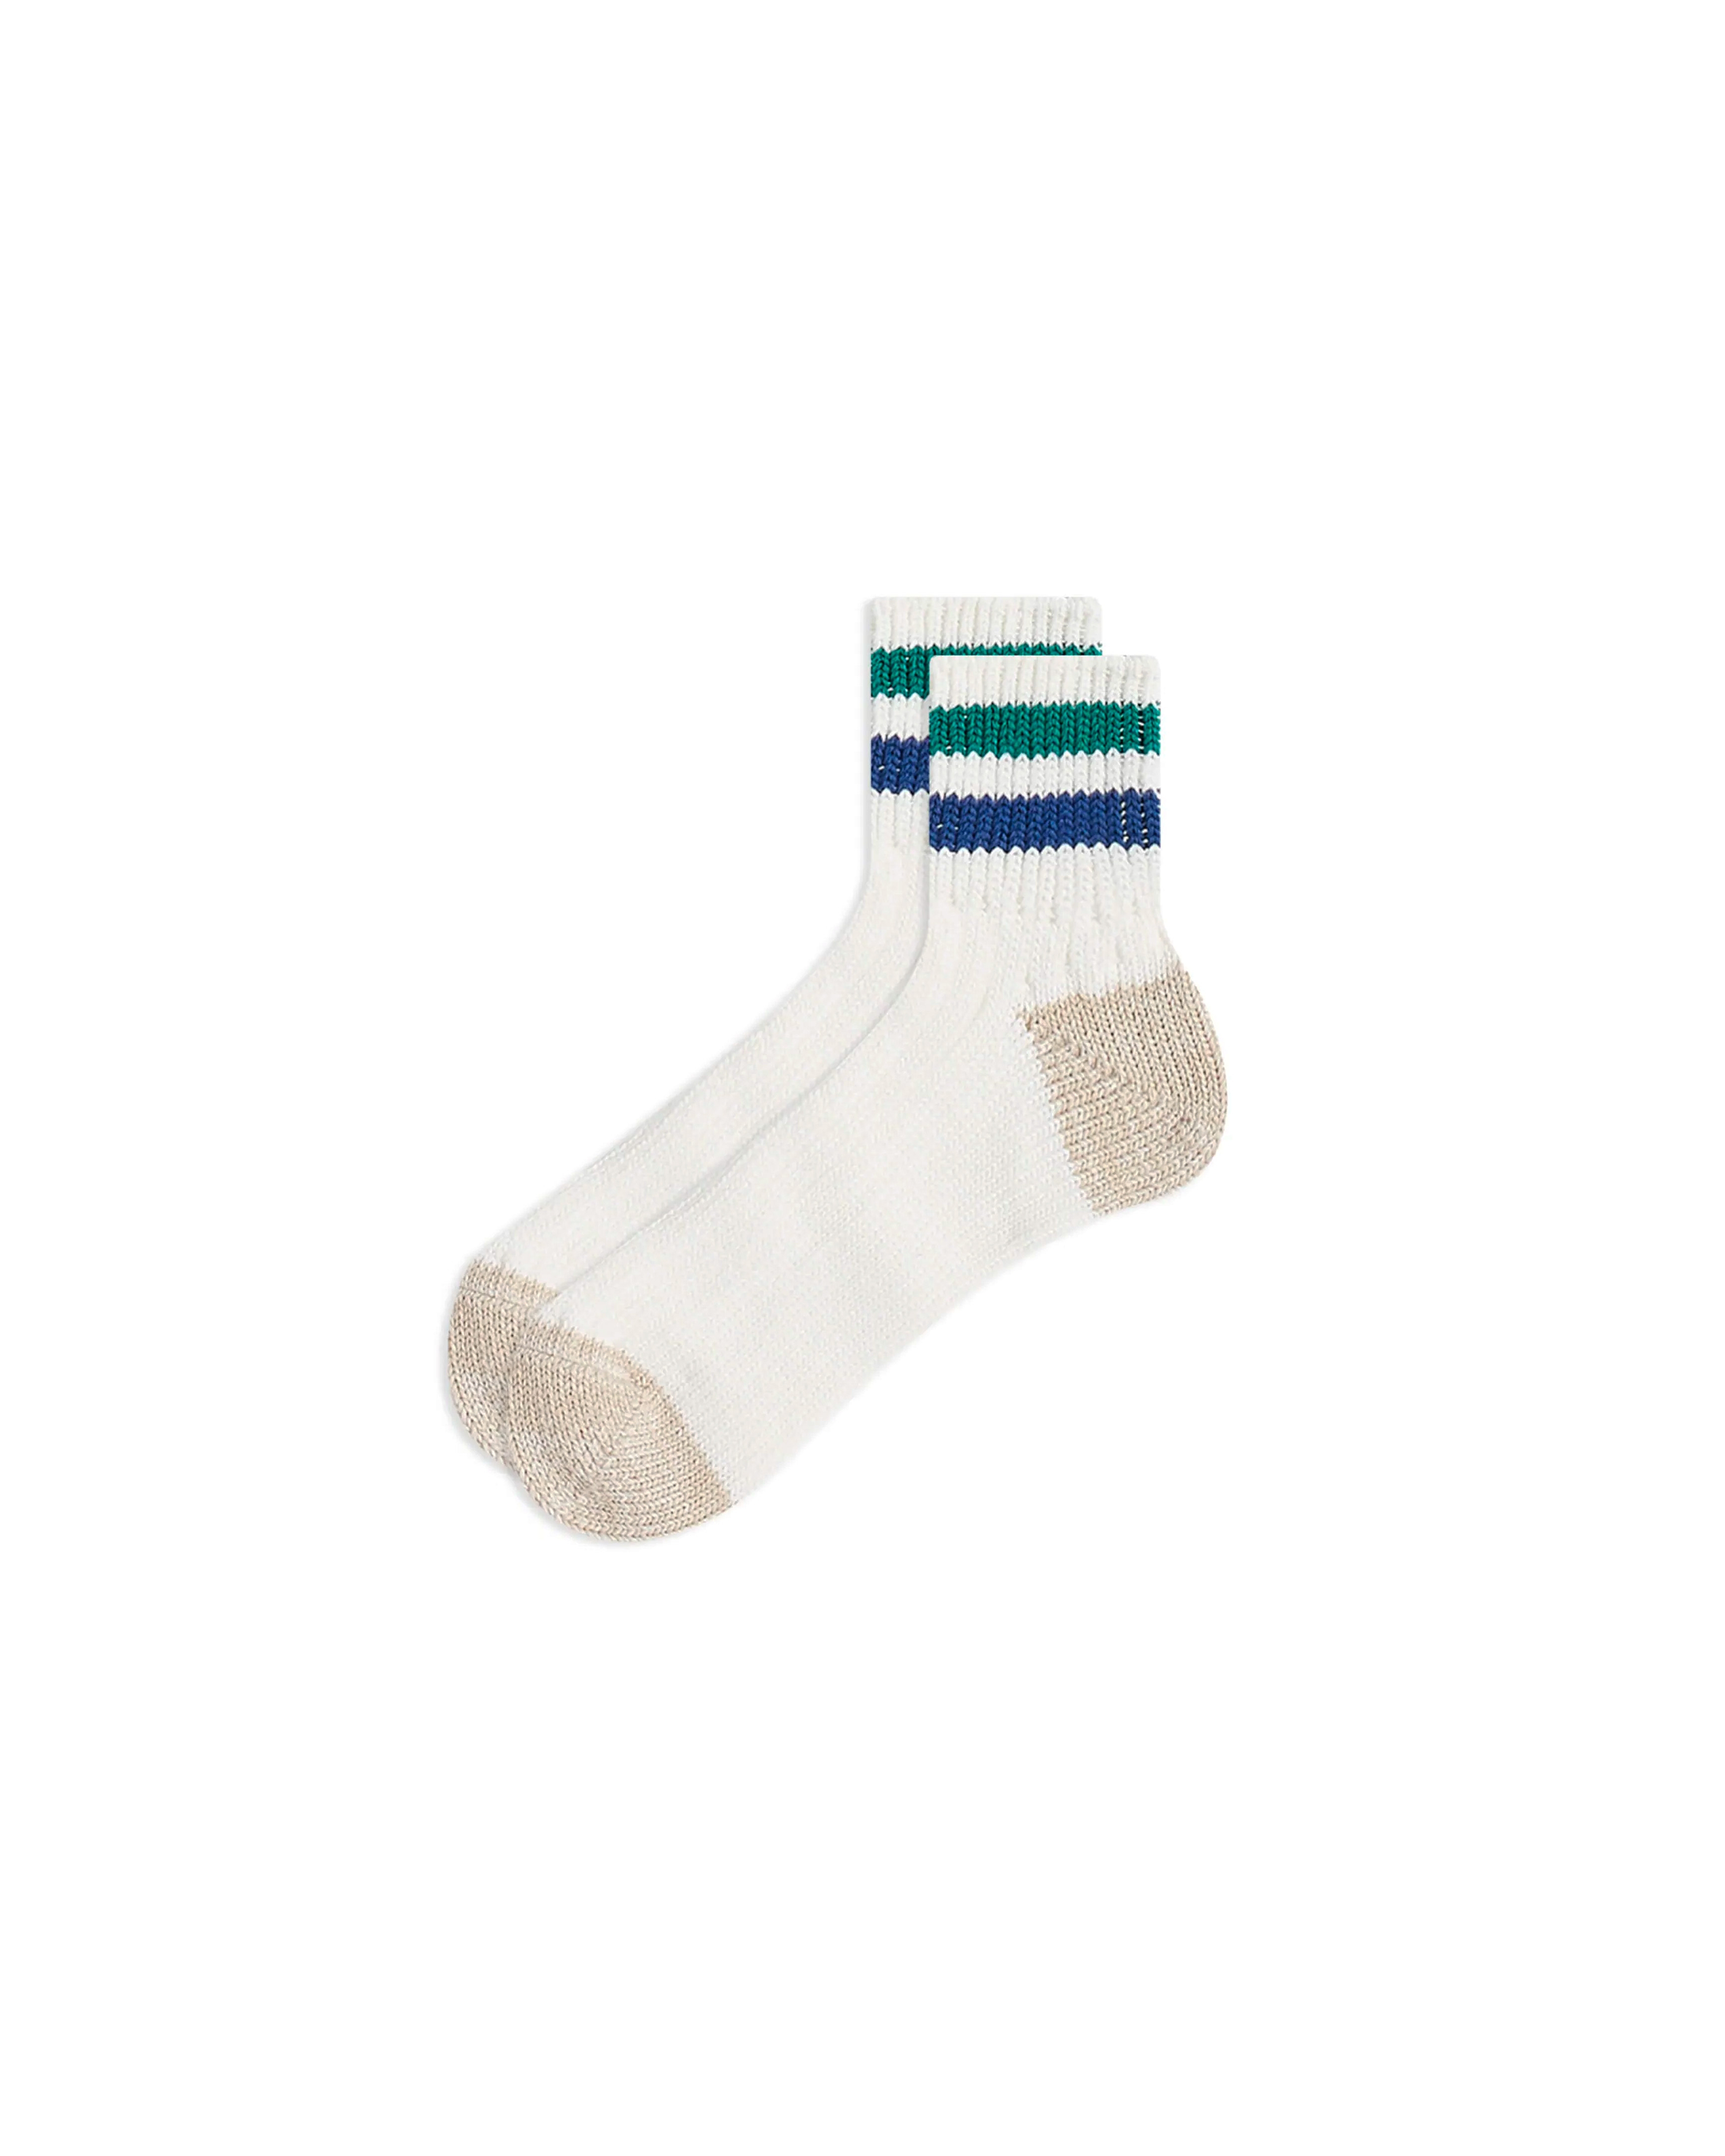 Coarse Ribbed Oldschool Ankle Sock - Green / Dark Blue